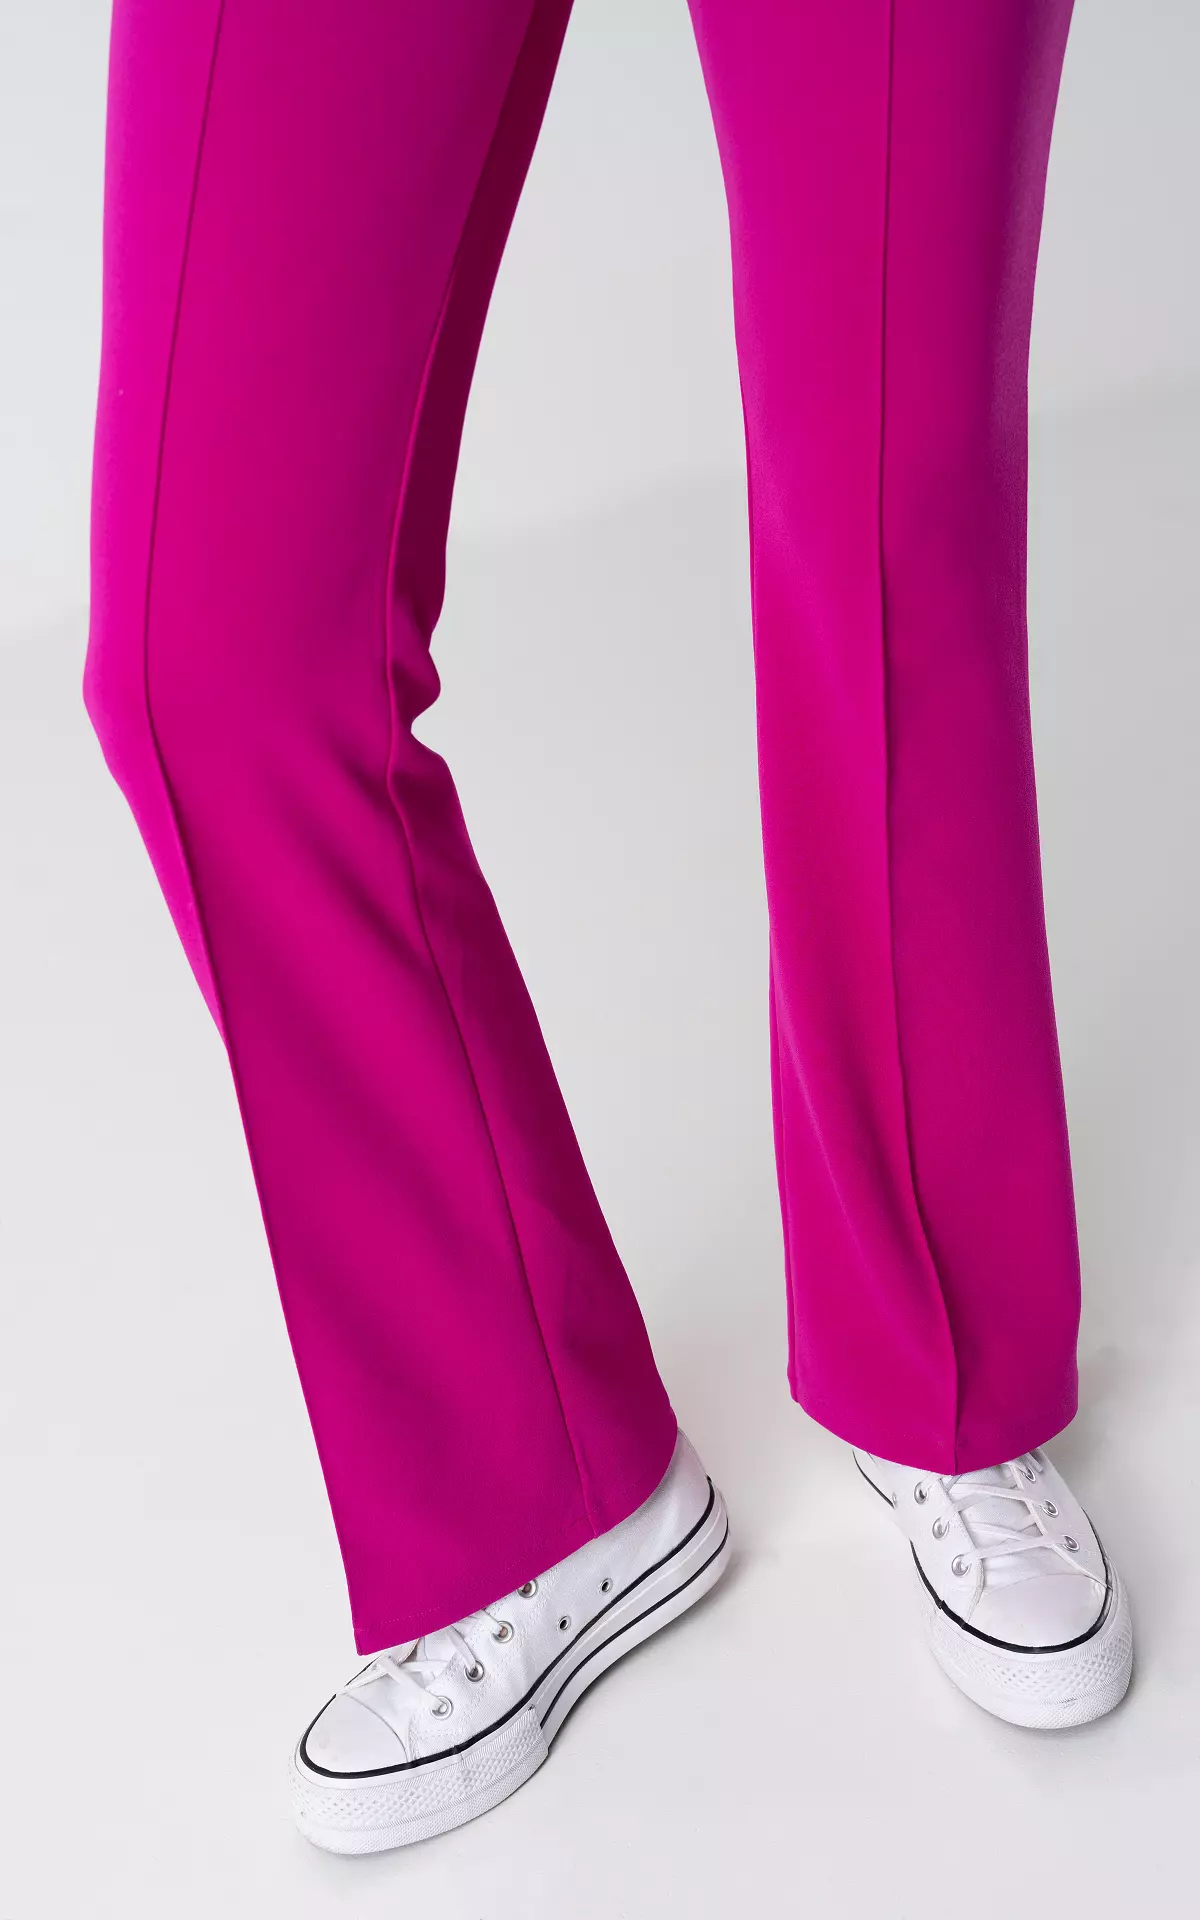 High-waist, flared trousers - Fuchsia